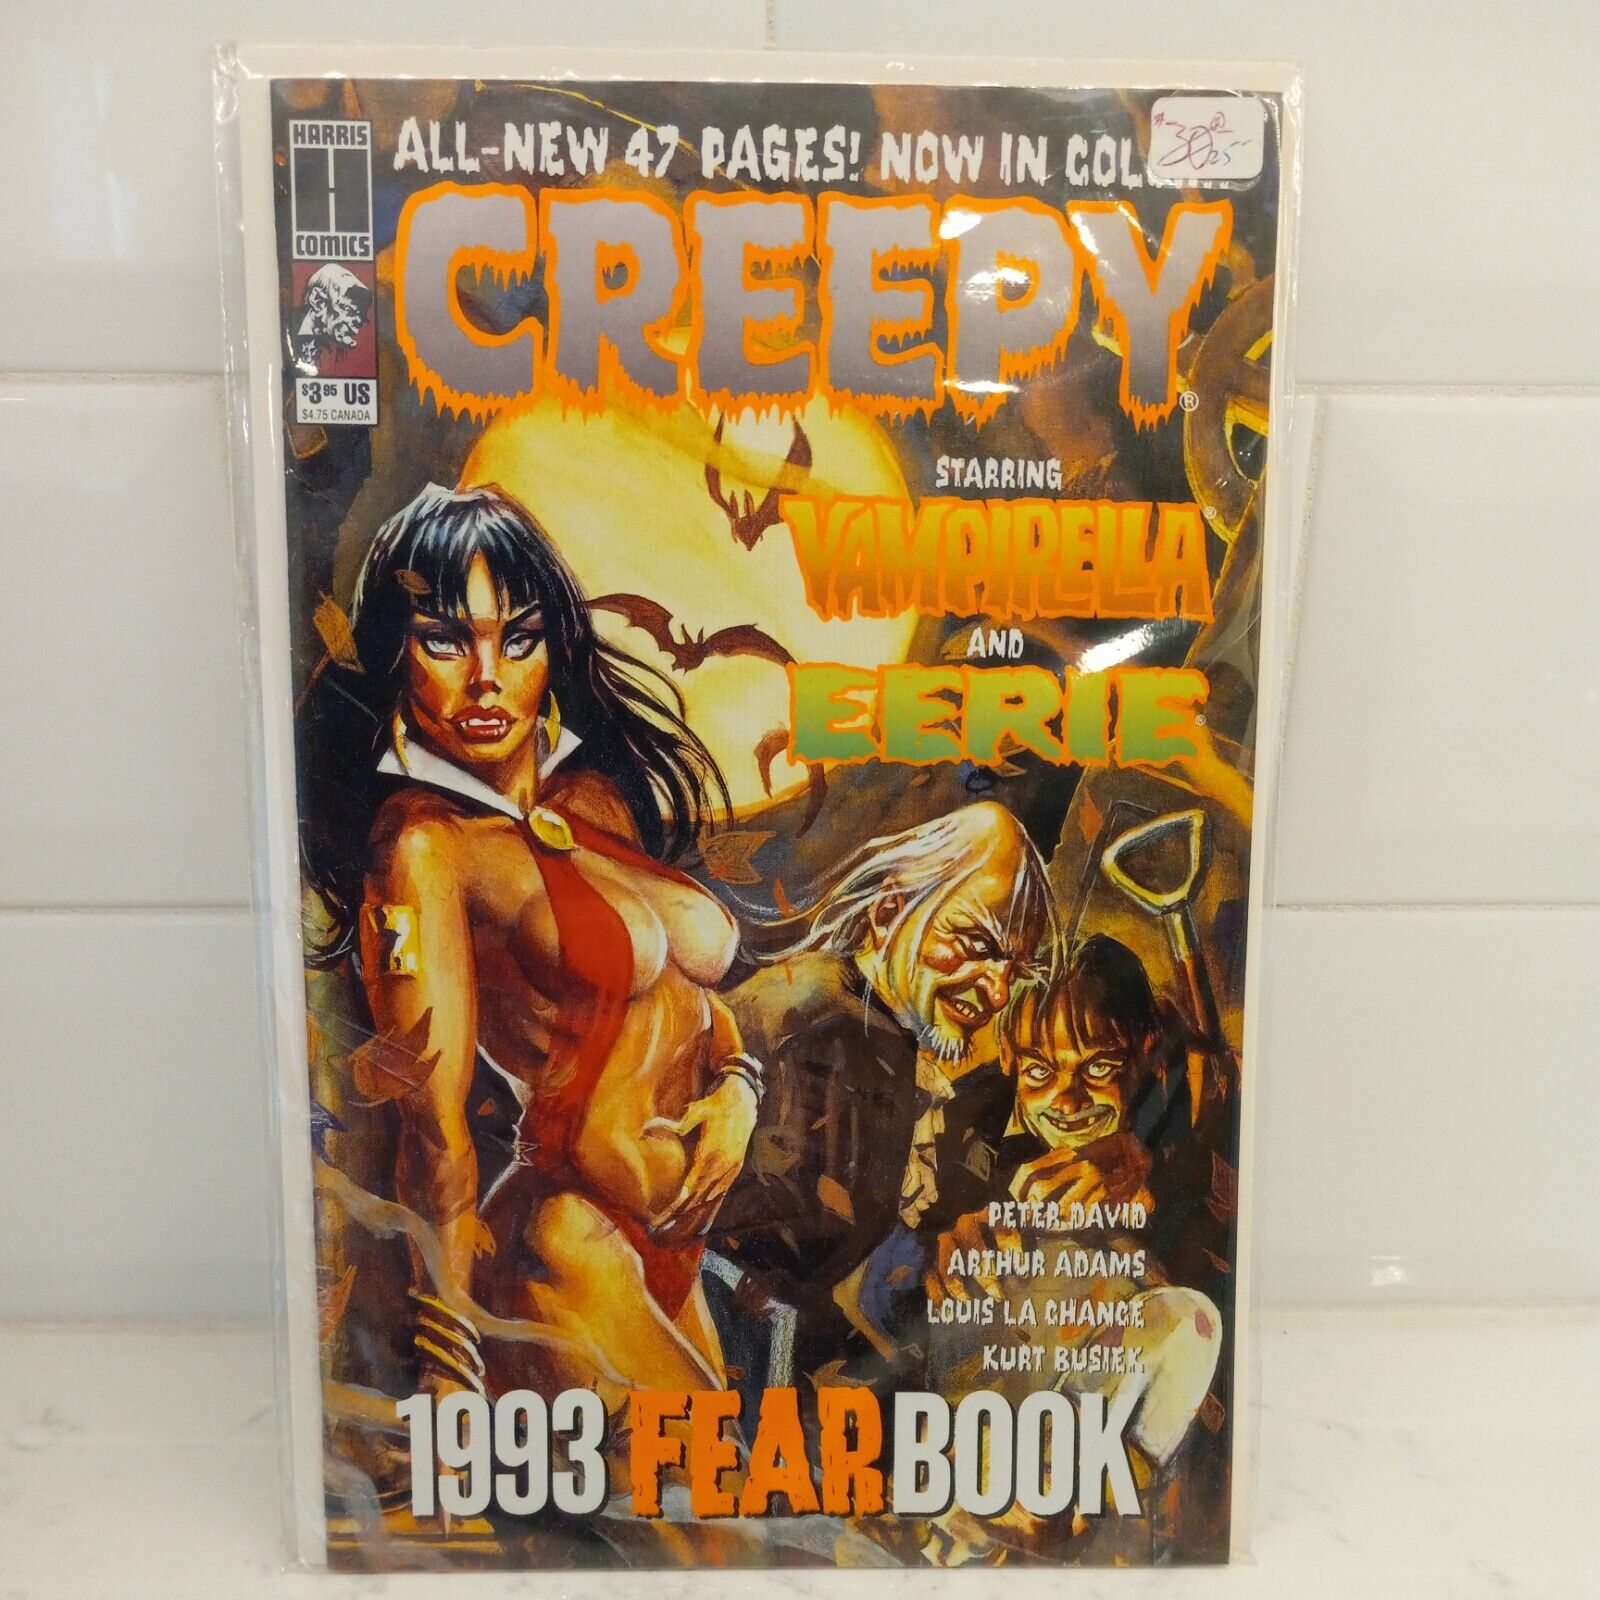 Creepy Starring Vampirella and Eerie 1993 Fear Book. 